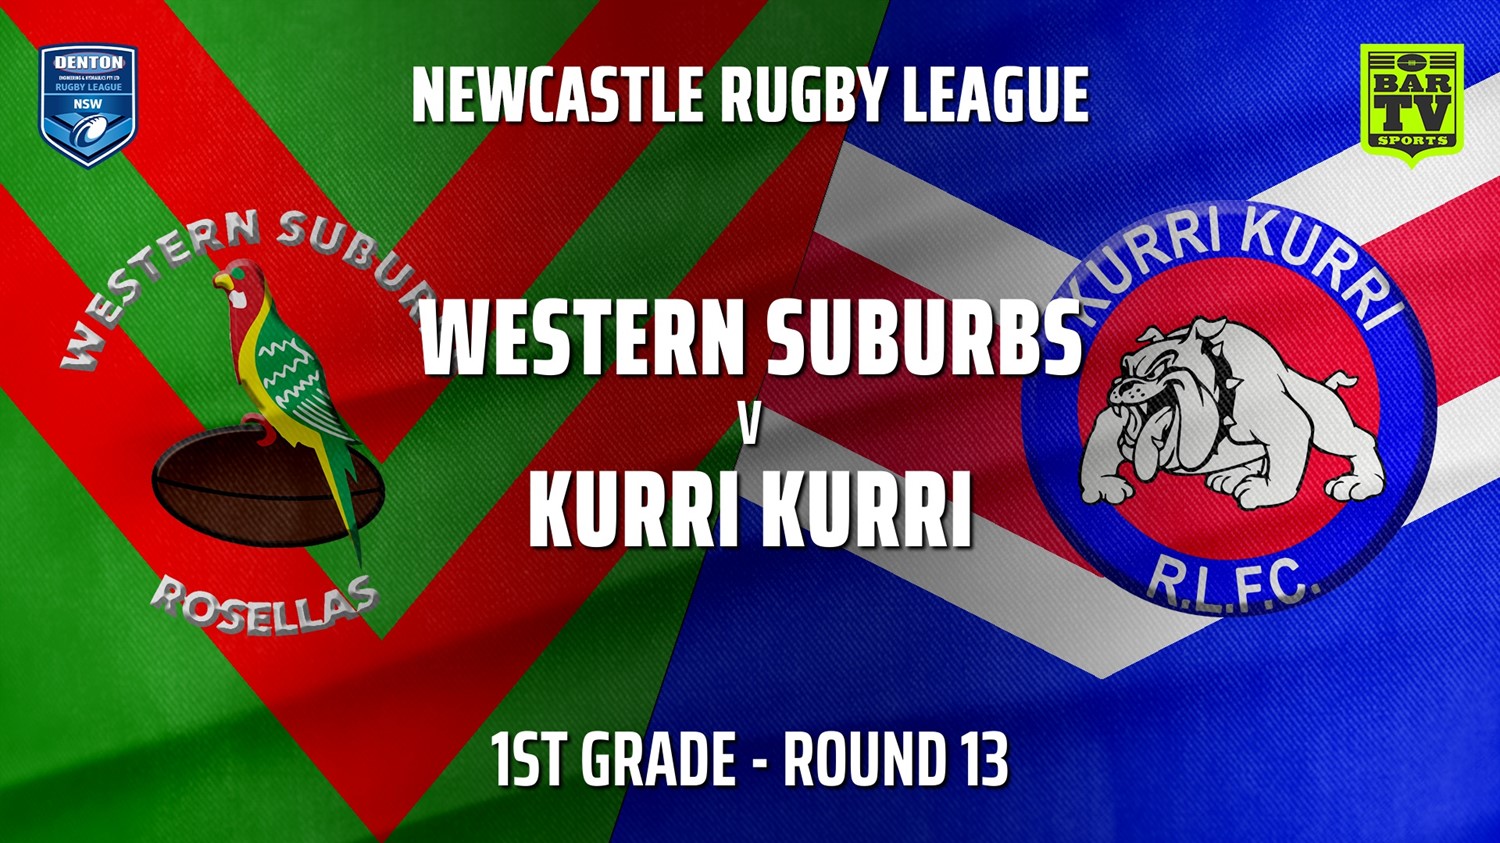 210703-Newcastle Round 13 - 1st Grade - Western Suburbs Rosellas v Kurri Kurri Bulldogs Minigame Slate Image